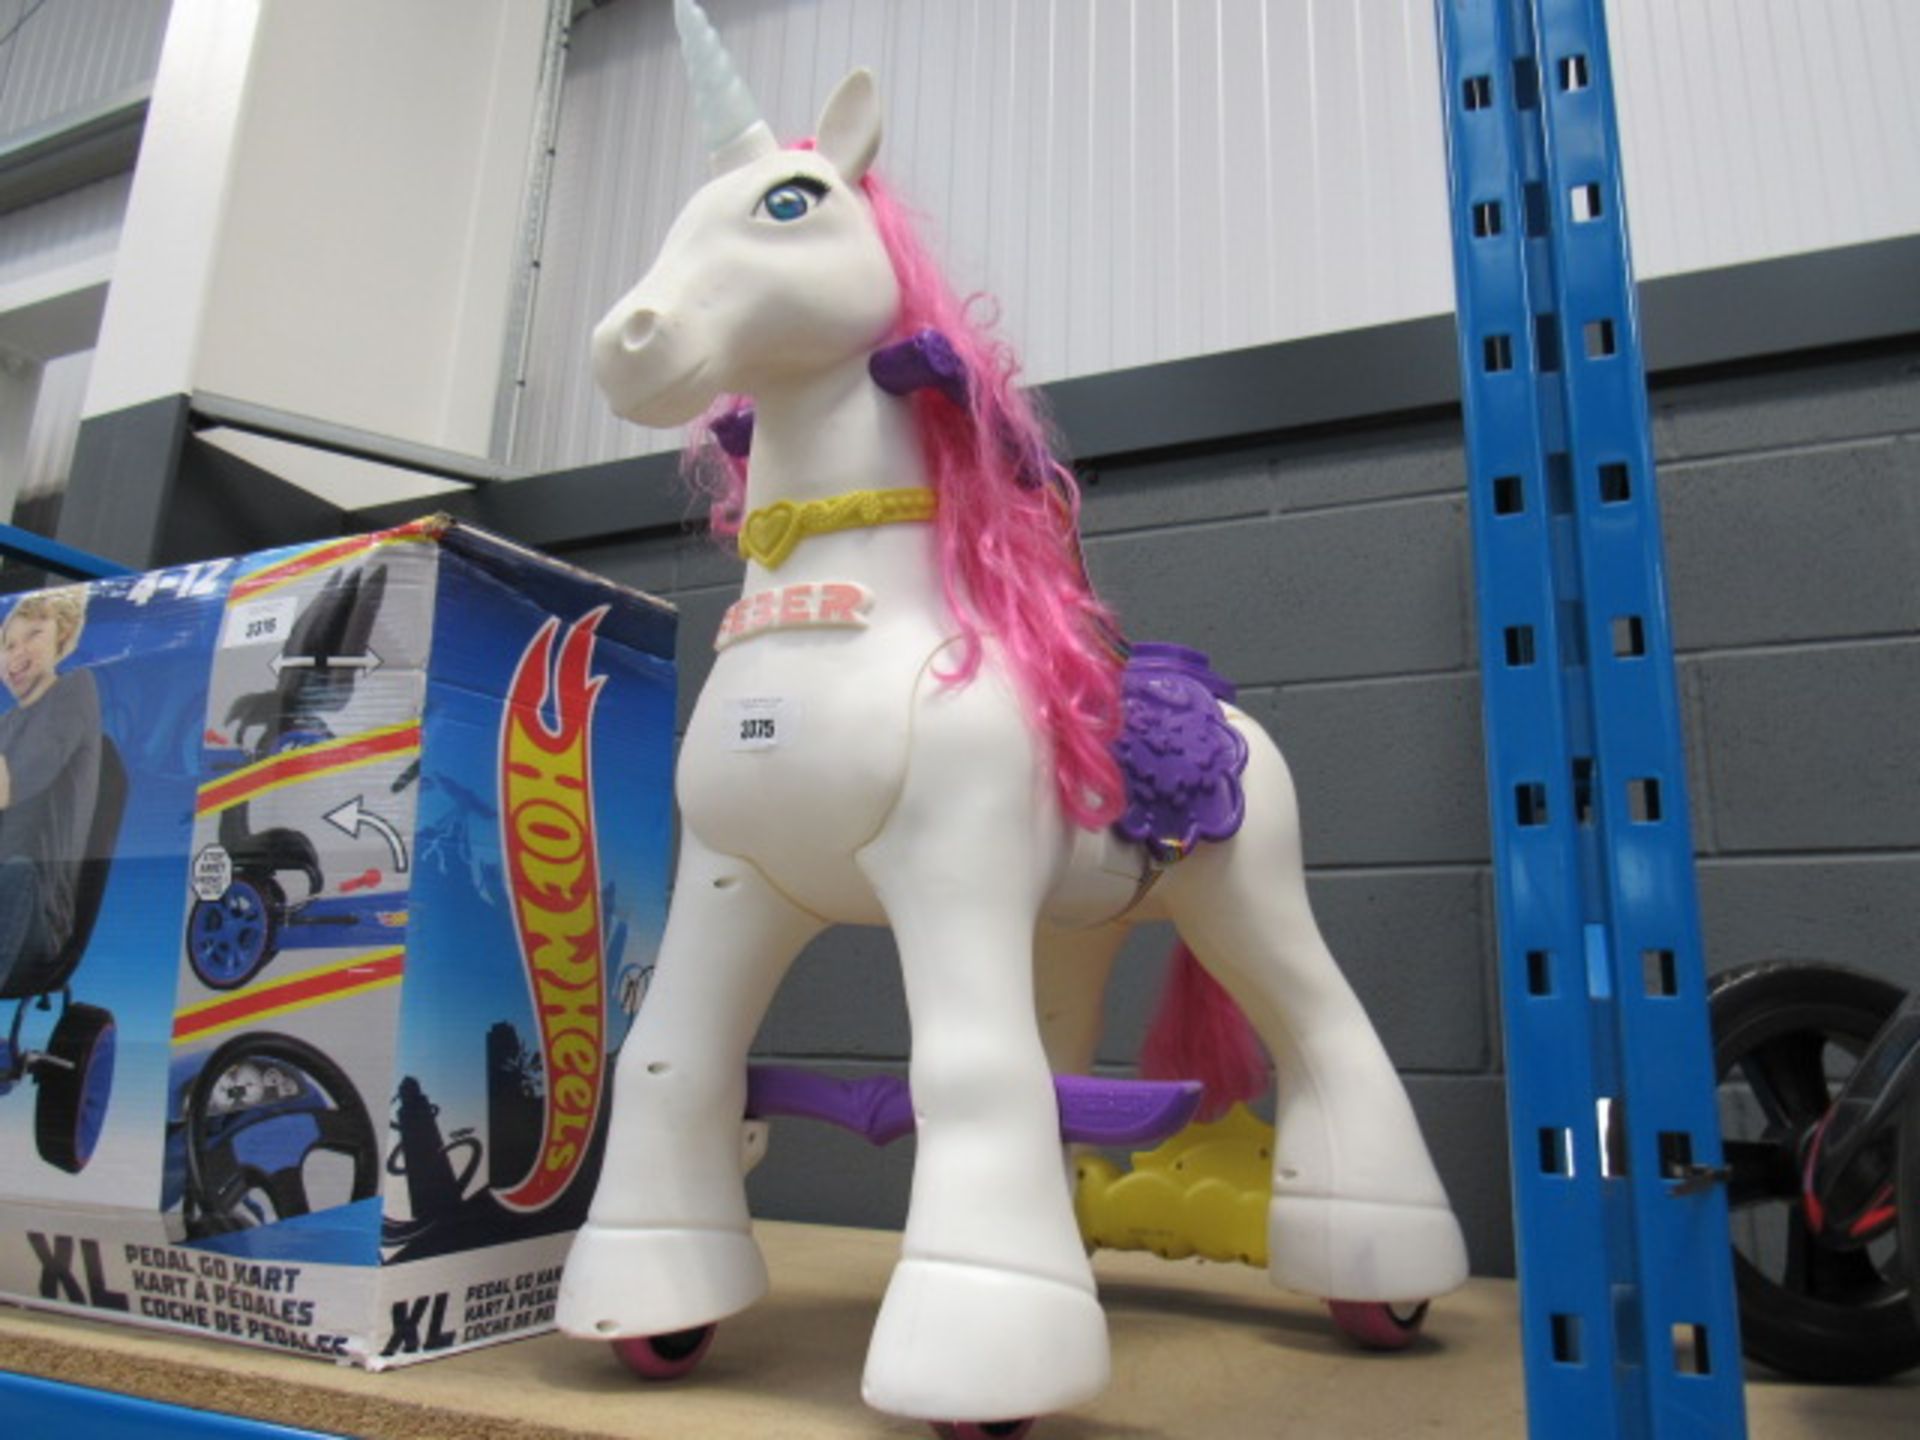 Sit on unicorn toy